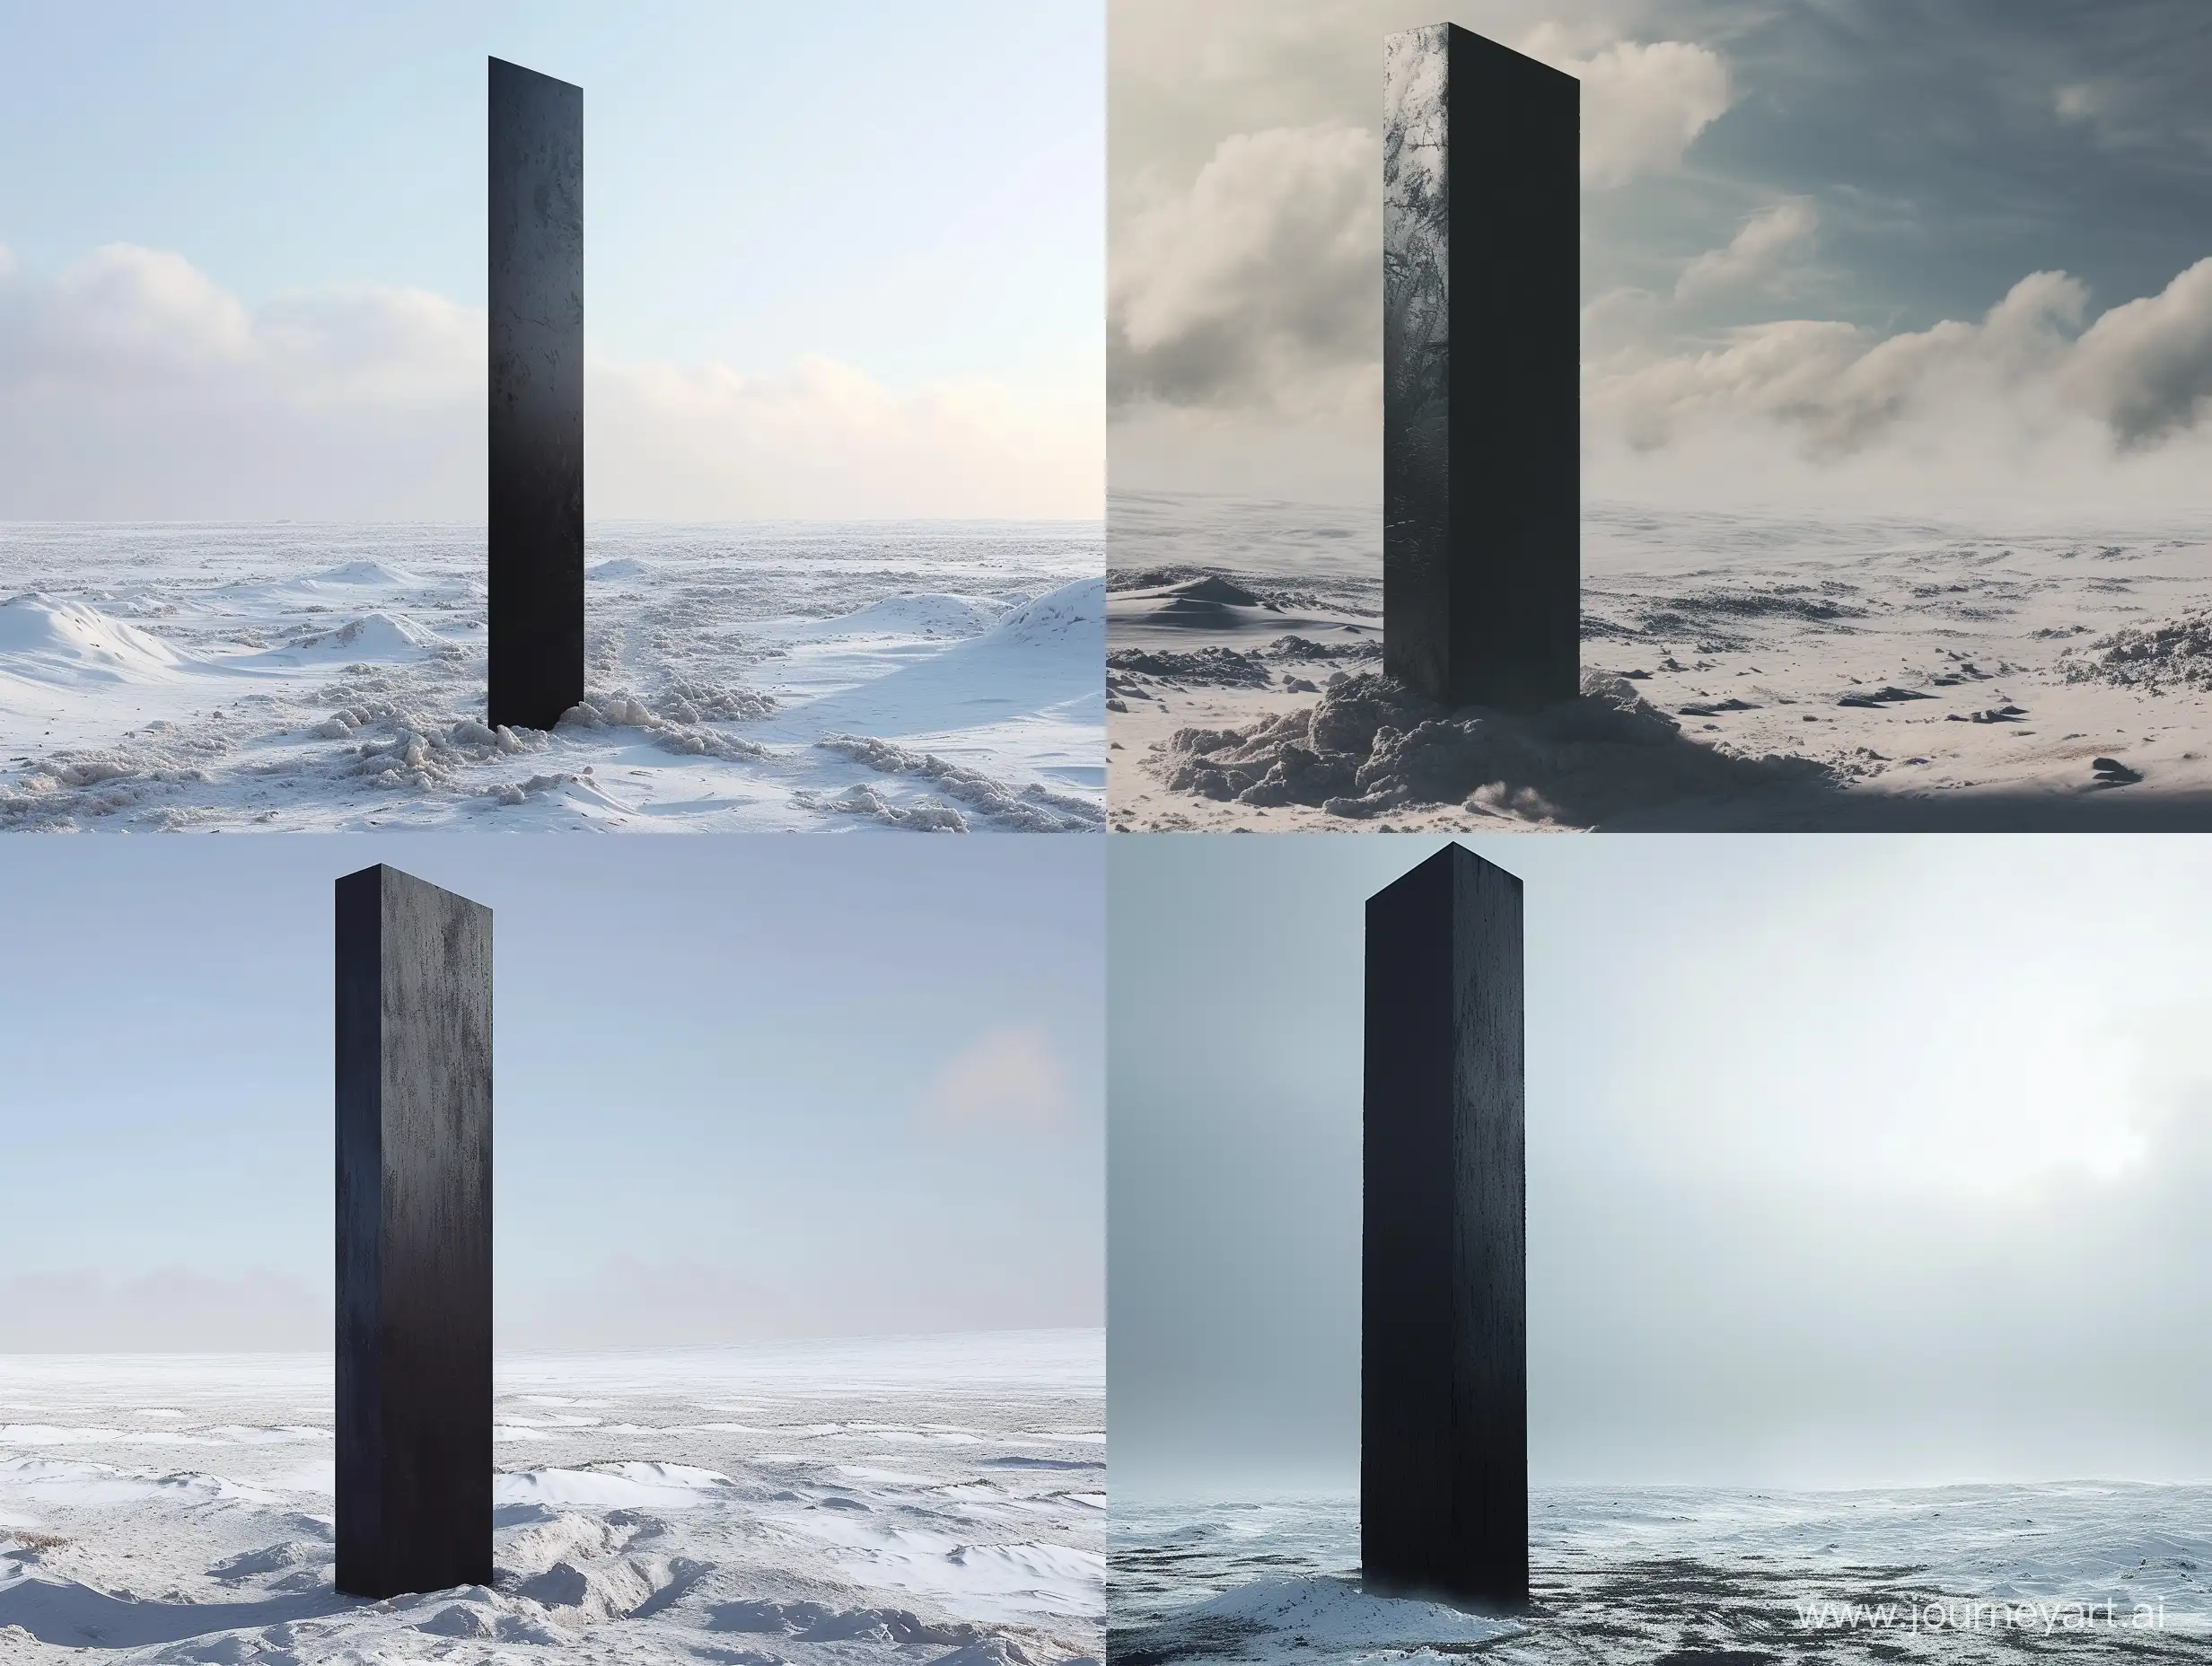 movie screenshot of a tall black monolith in a desolate snowy landscape